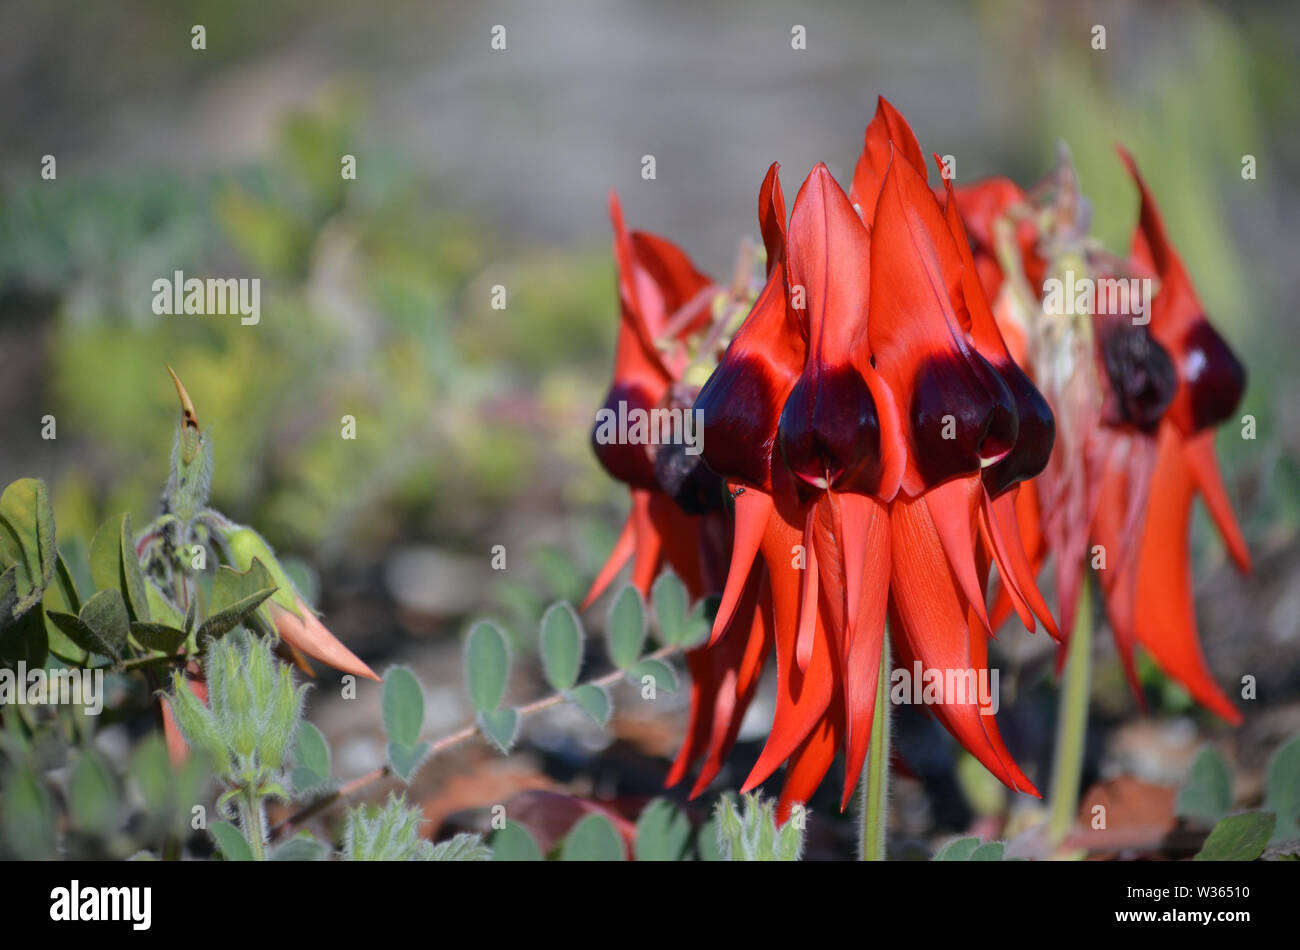 Australian native Sturts Desert Pea Blumen, Swainsona Formosa, Familie Fabaceae. Floral Emblem von South Australia. Stockfoto